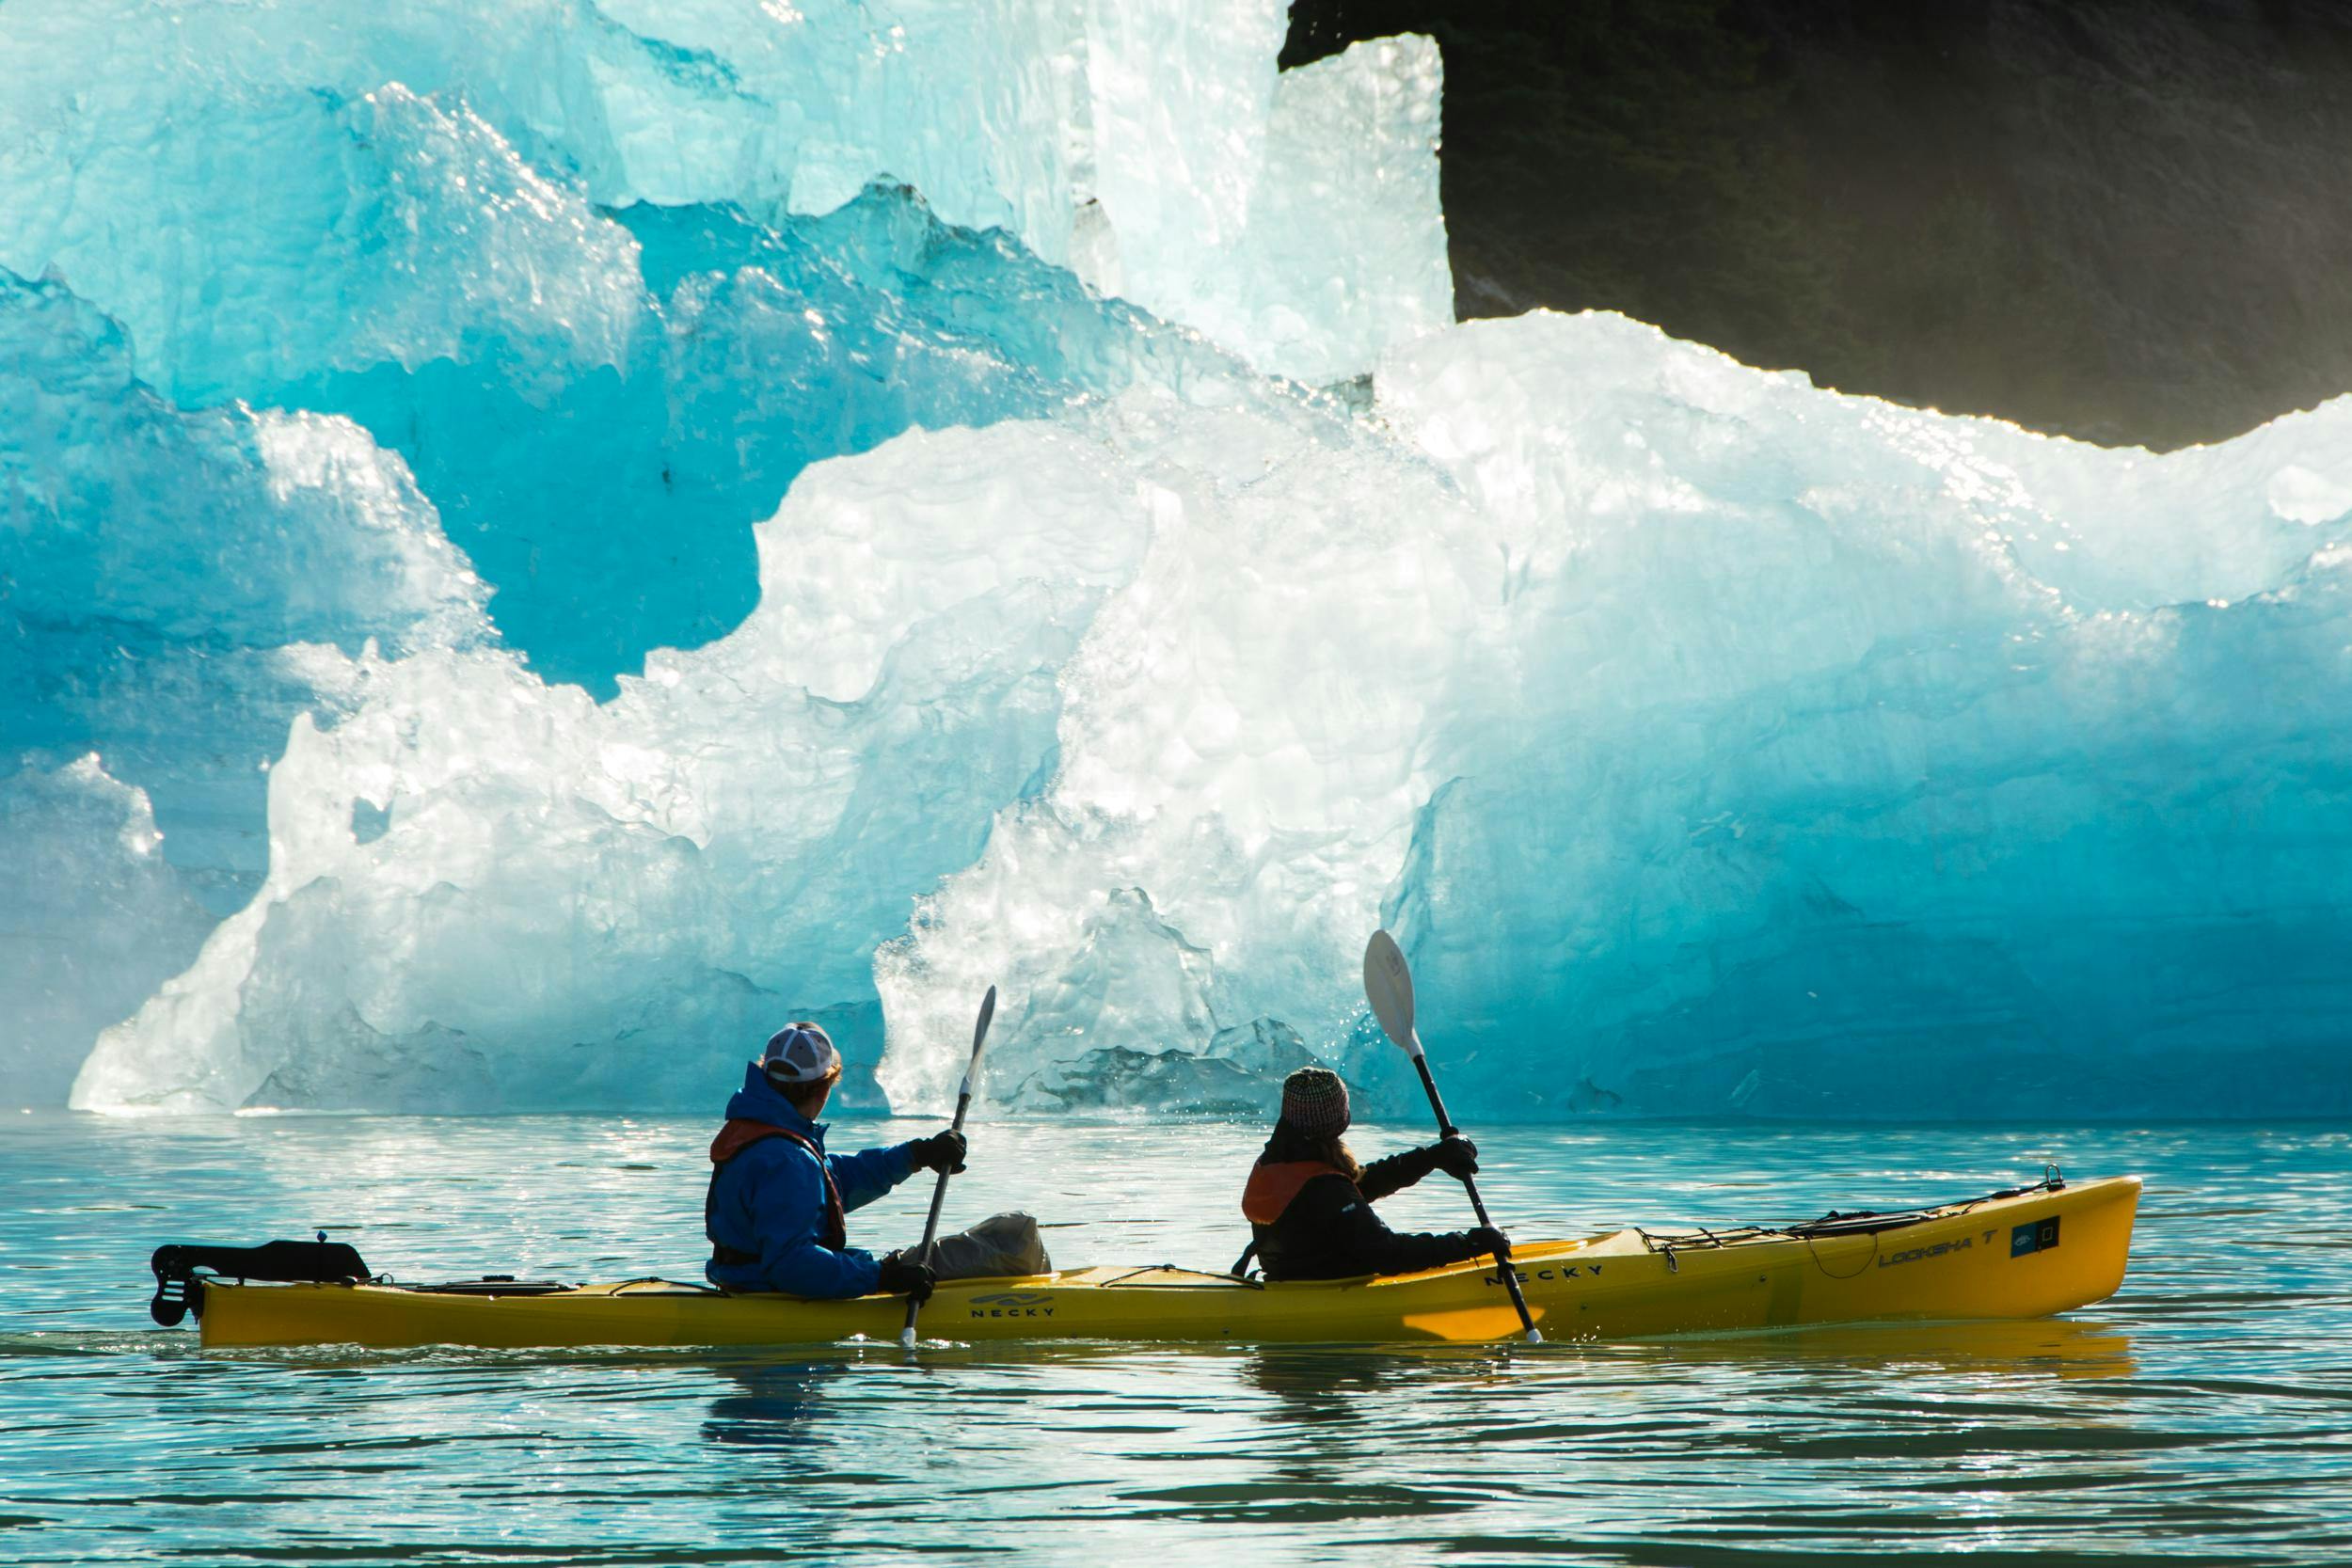 Guests kayaking through scenic Endicott Arm Fjord, Alaska